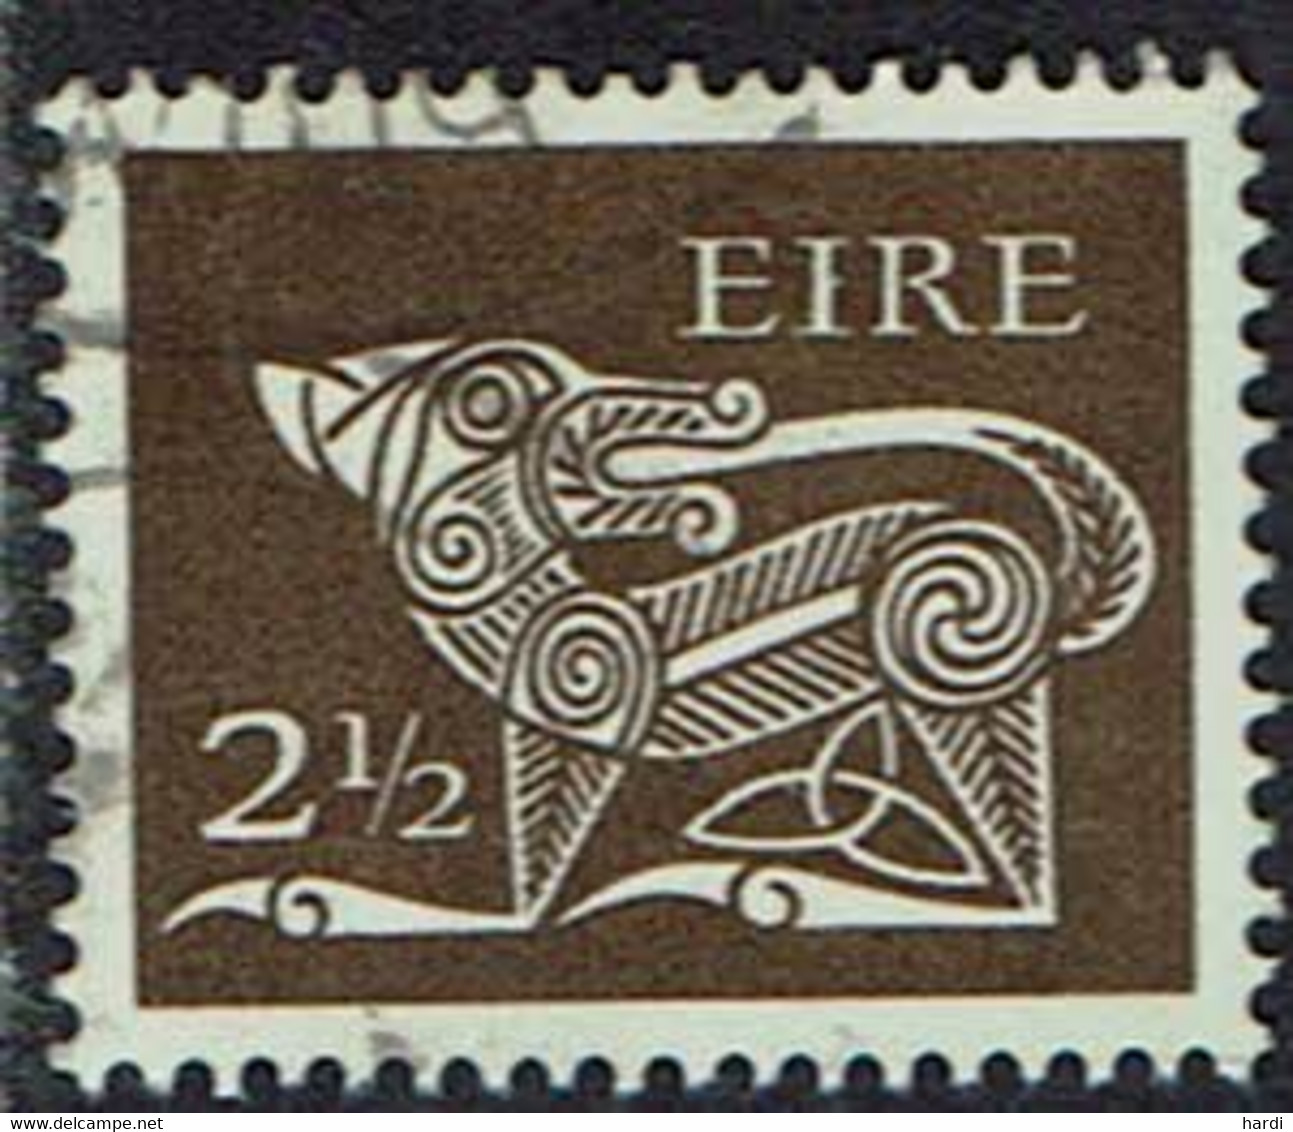 Irland 1971, MiNr 254XA, Gestempelt - Usati